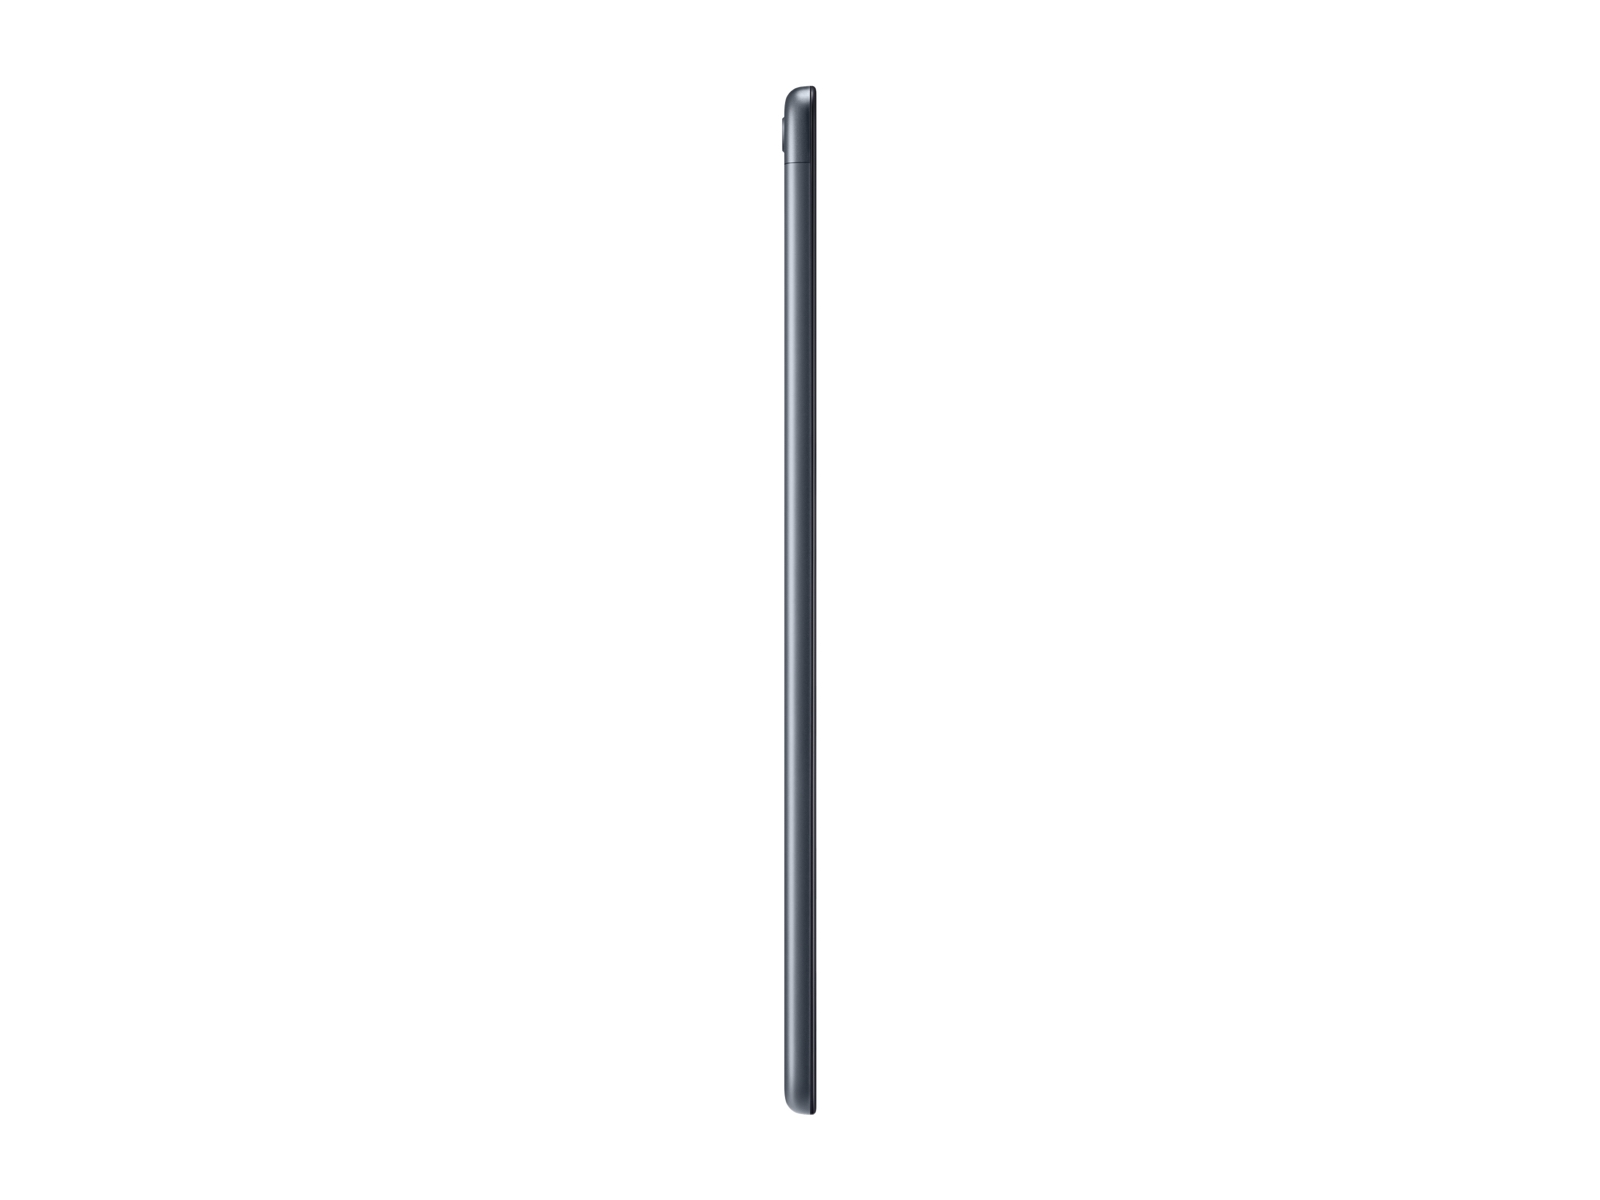 Thumbnail image of Galaxy Tab A 10.1 (2019), 64GB, Black (Wi-Fi)